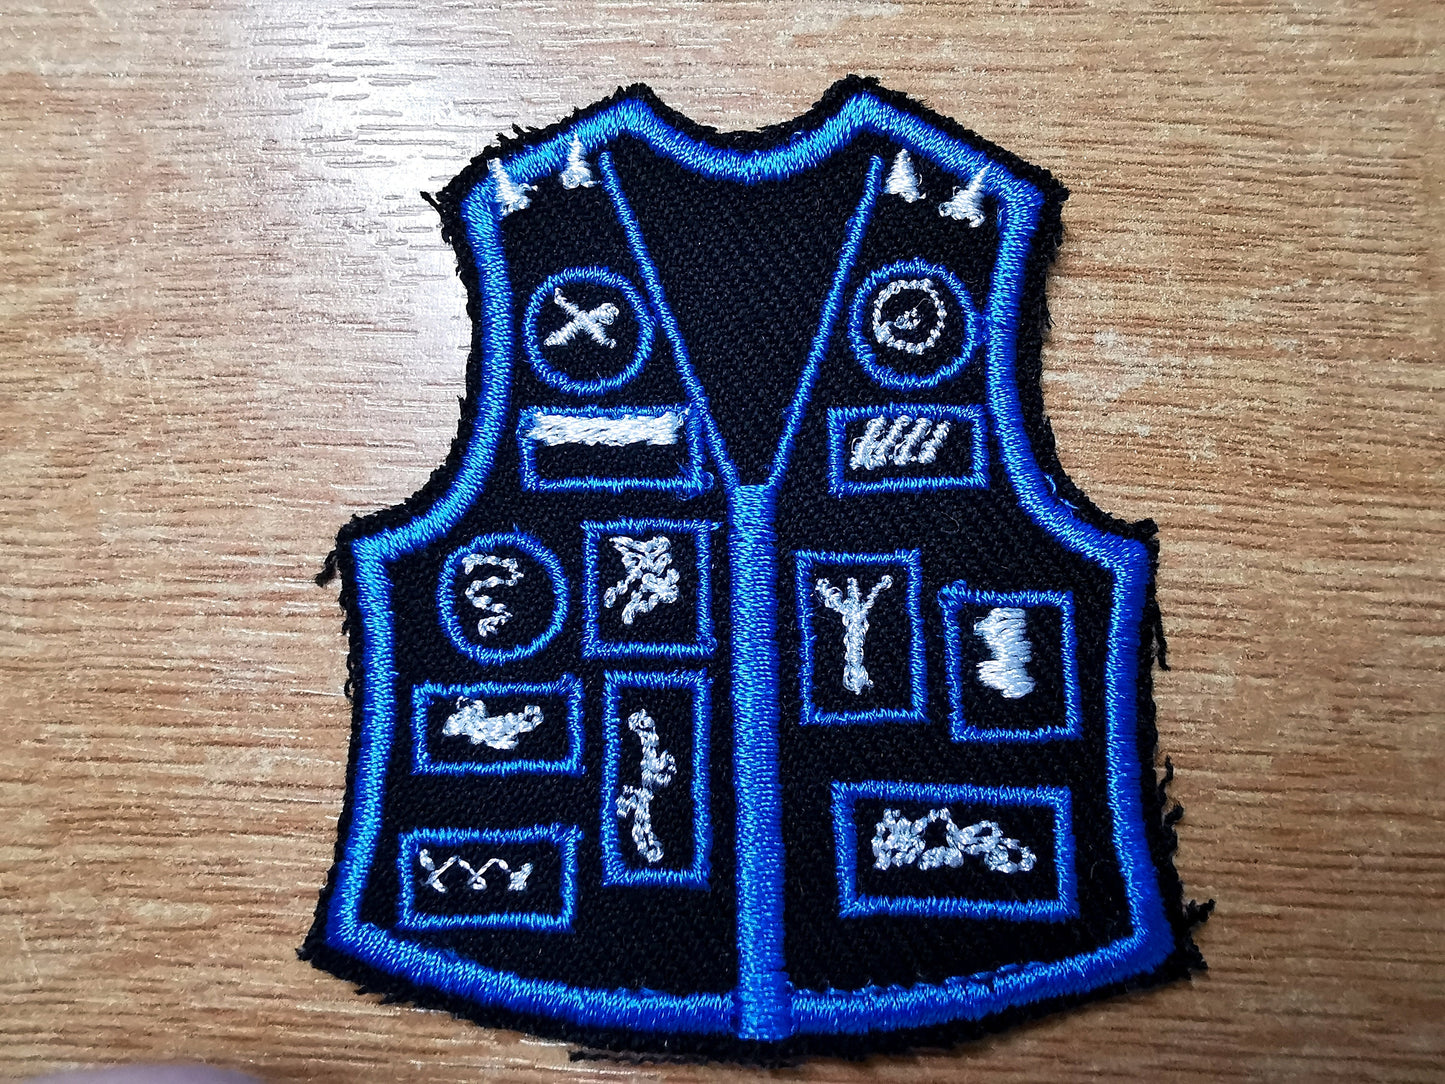 Battle Jacket Embroidered Patch Jacket Parody Death Metal Black Metal Patch Thrash Metal Viking Bright Vibrant Blue